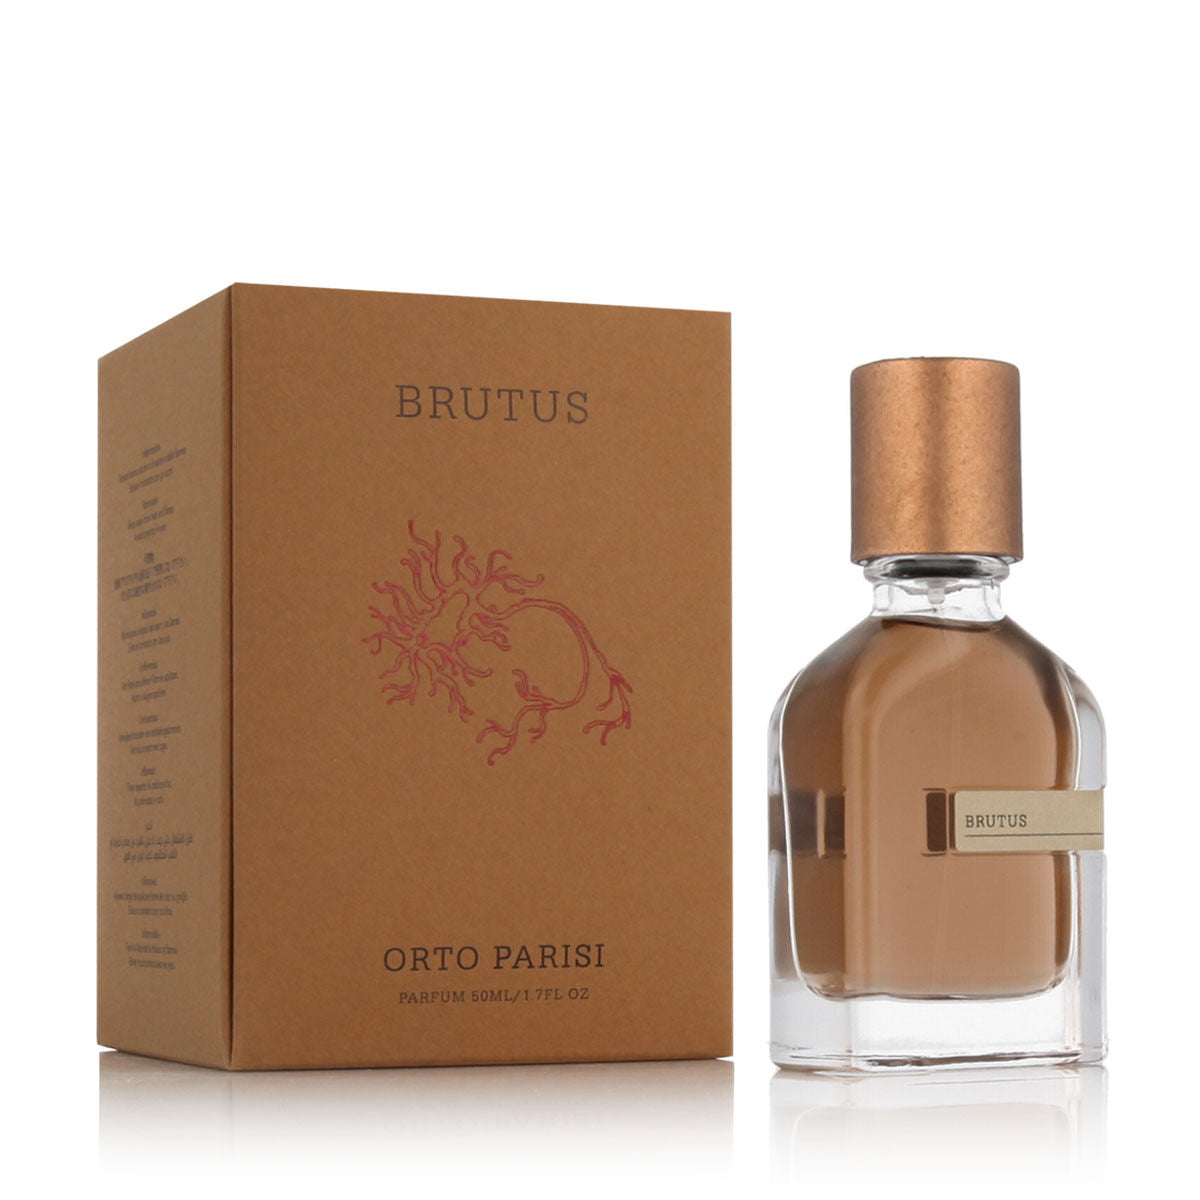 Kaufe Unisex-Parfüm Orto Parisi EDP Brutus 50 ml bei AWK Flagship um € 141.00